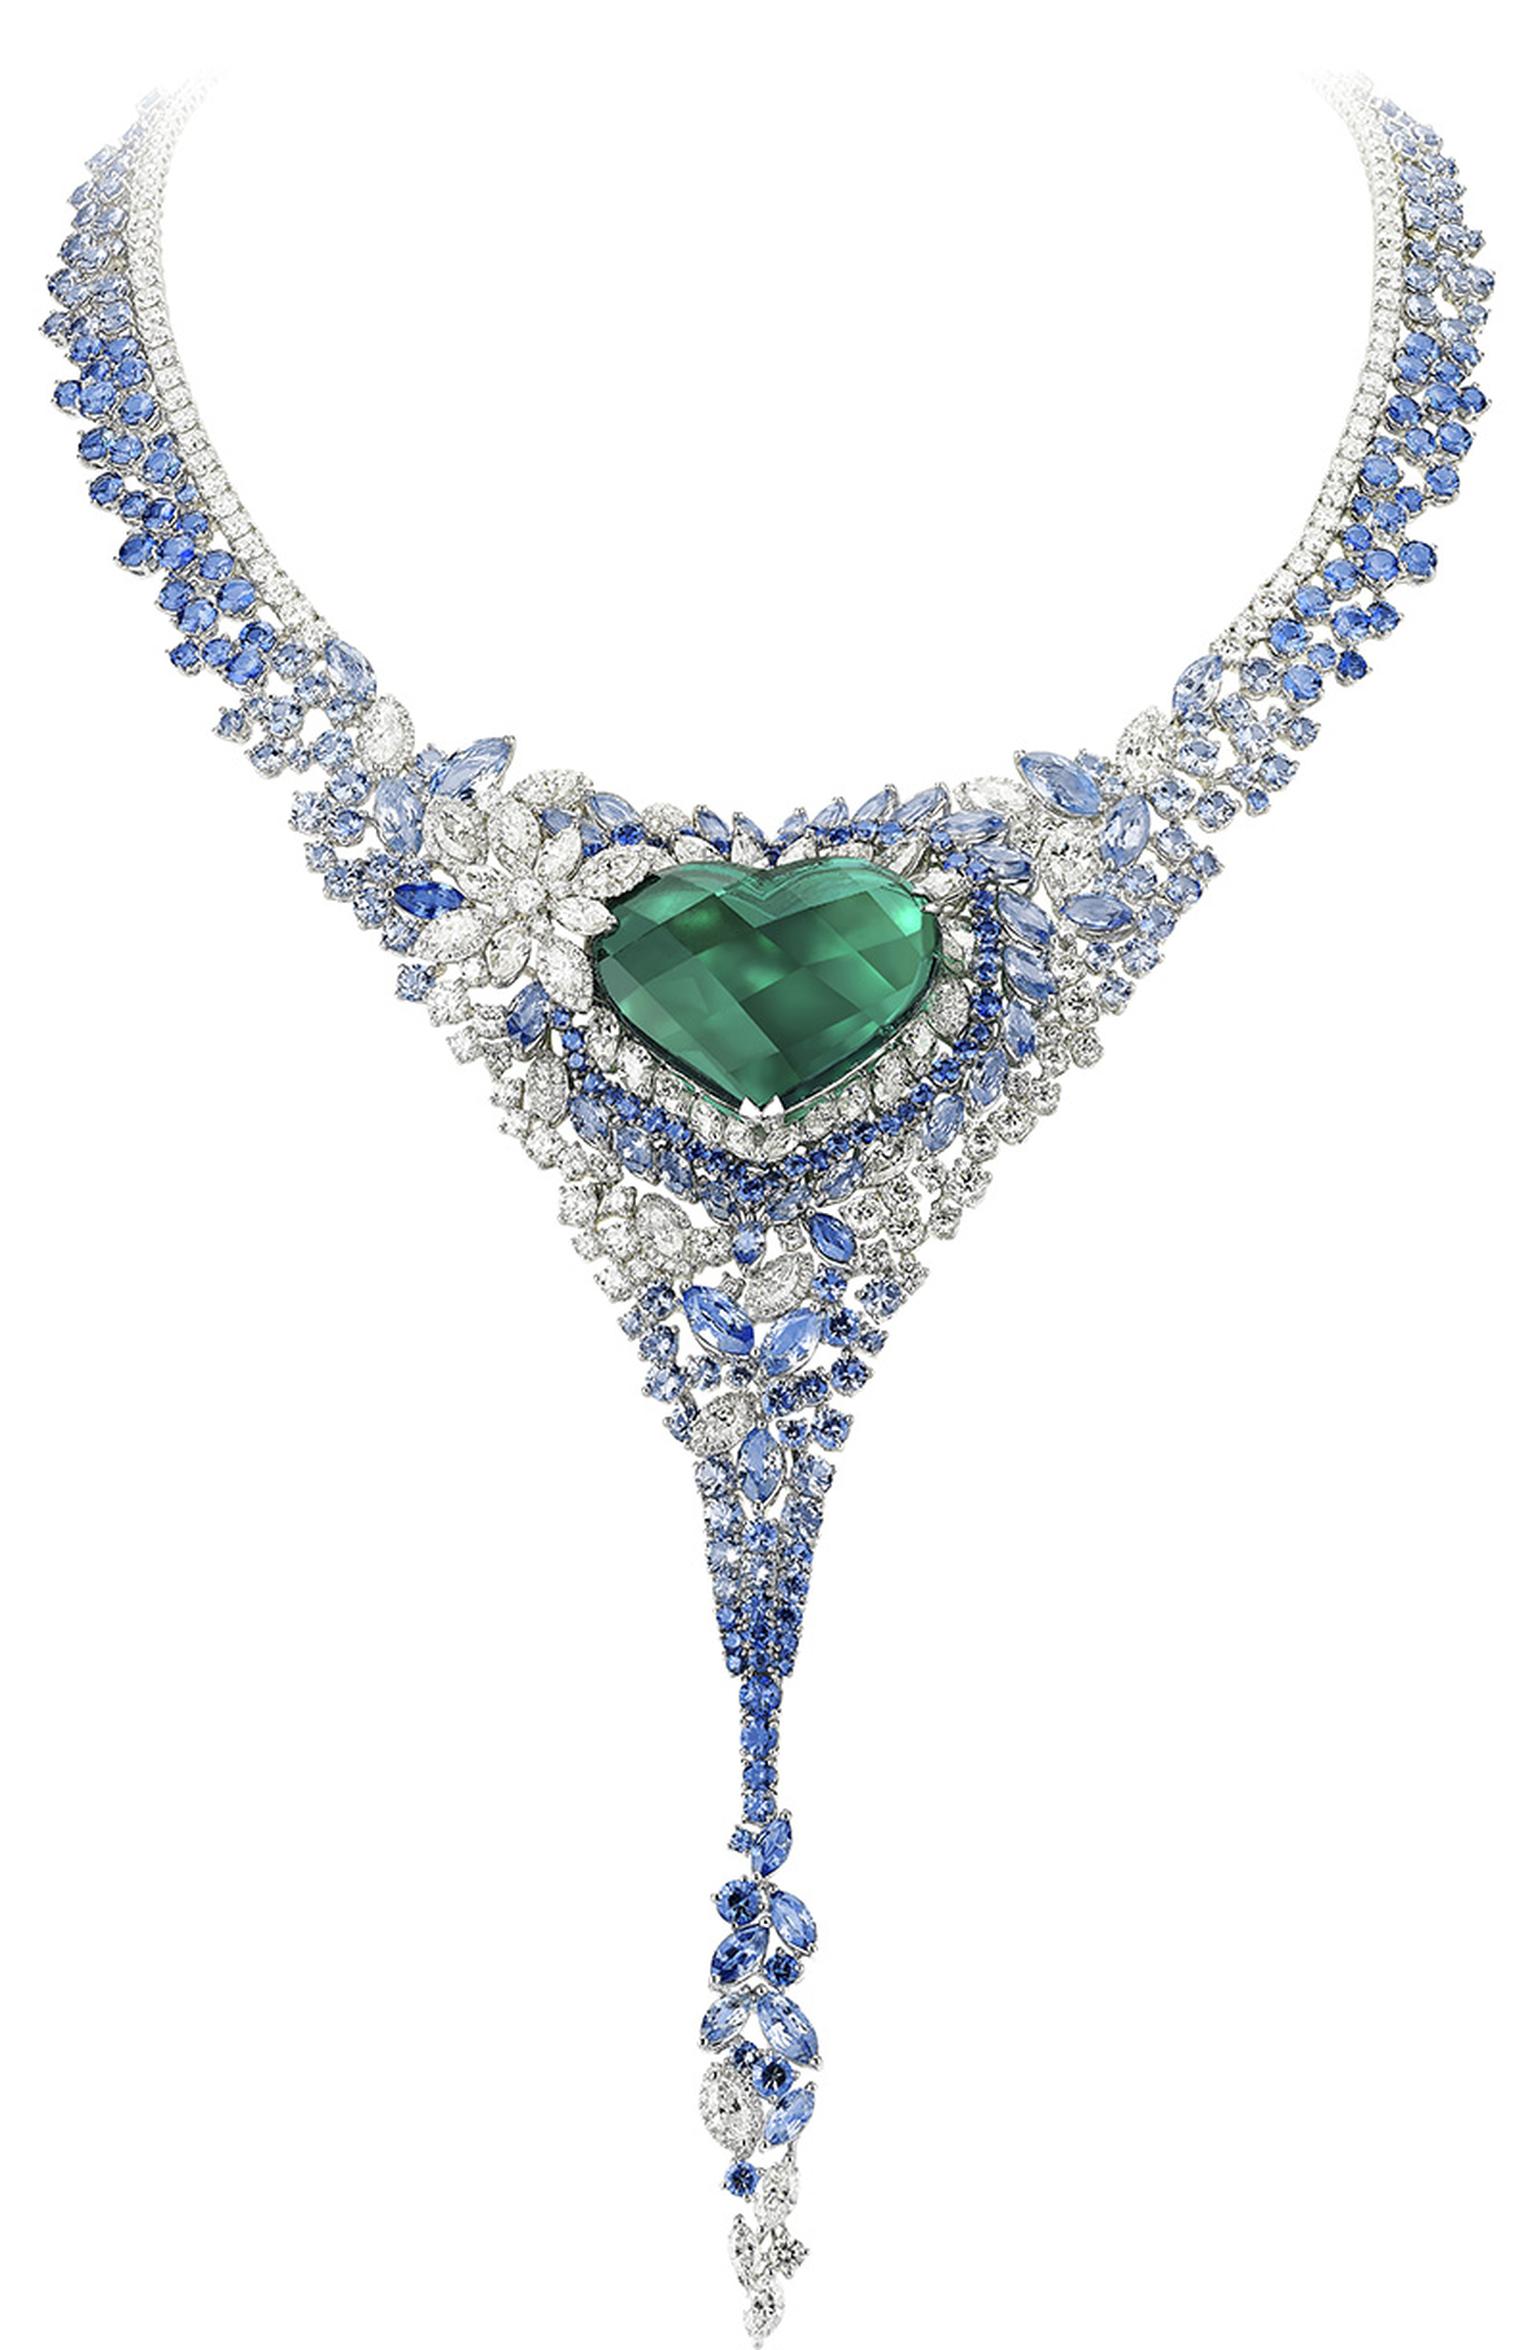 01-Avakian-Heart-shape-emerald-and-sapphire-necklace.jpg